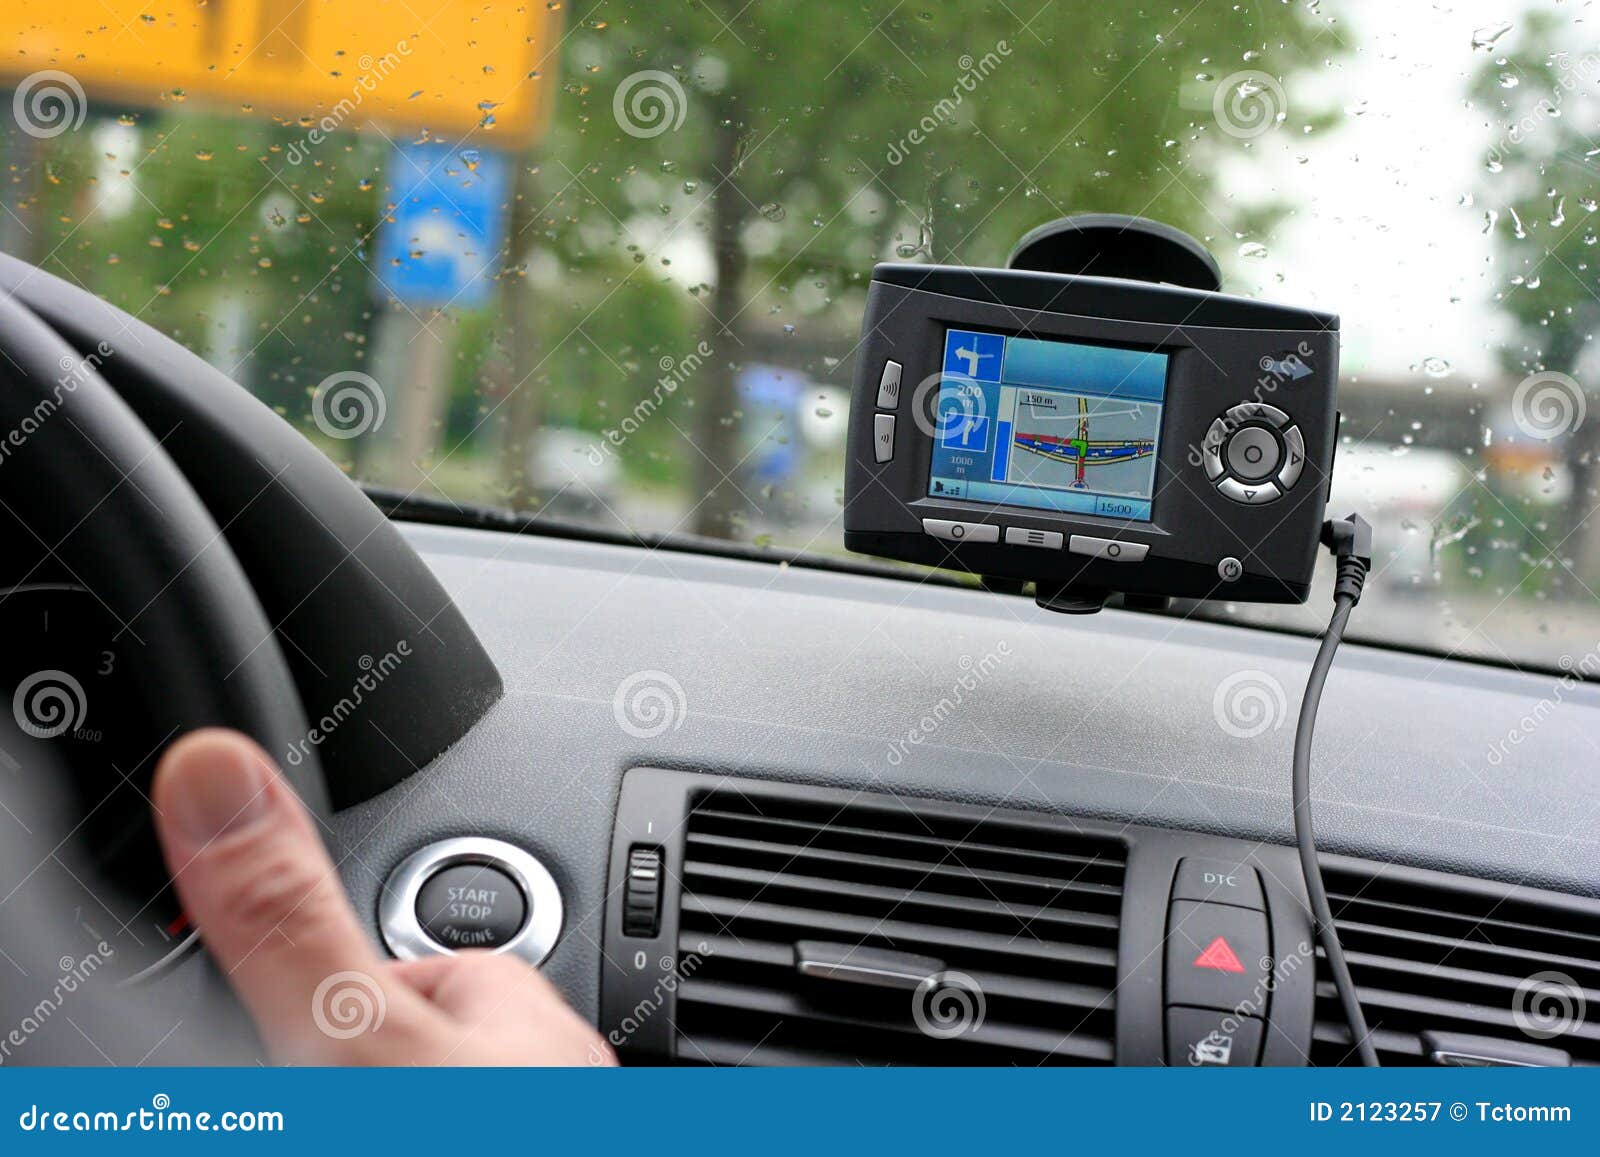 car gps, navigational system